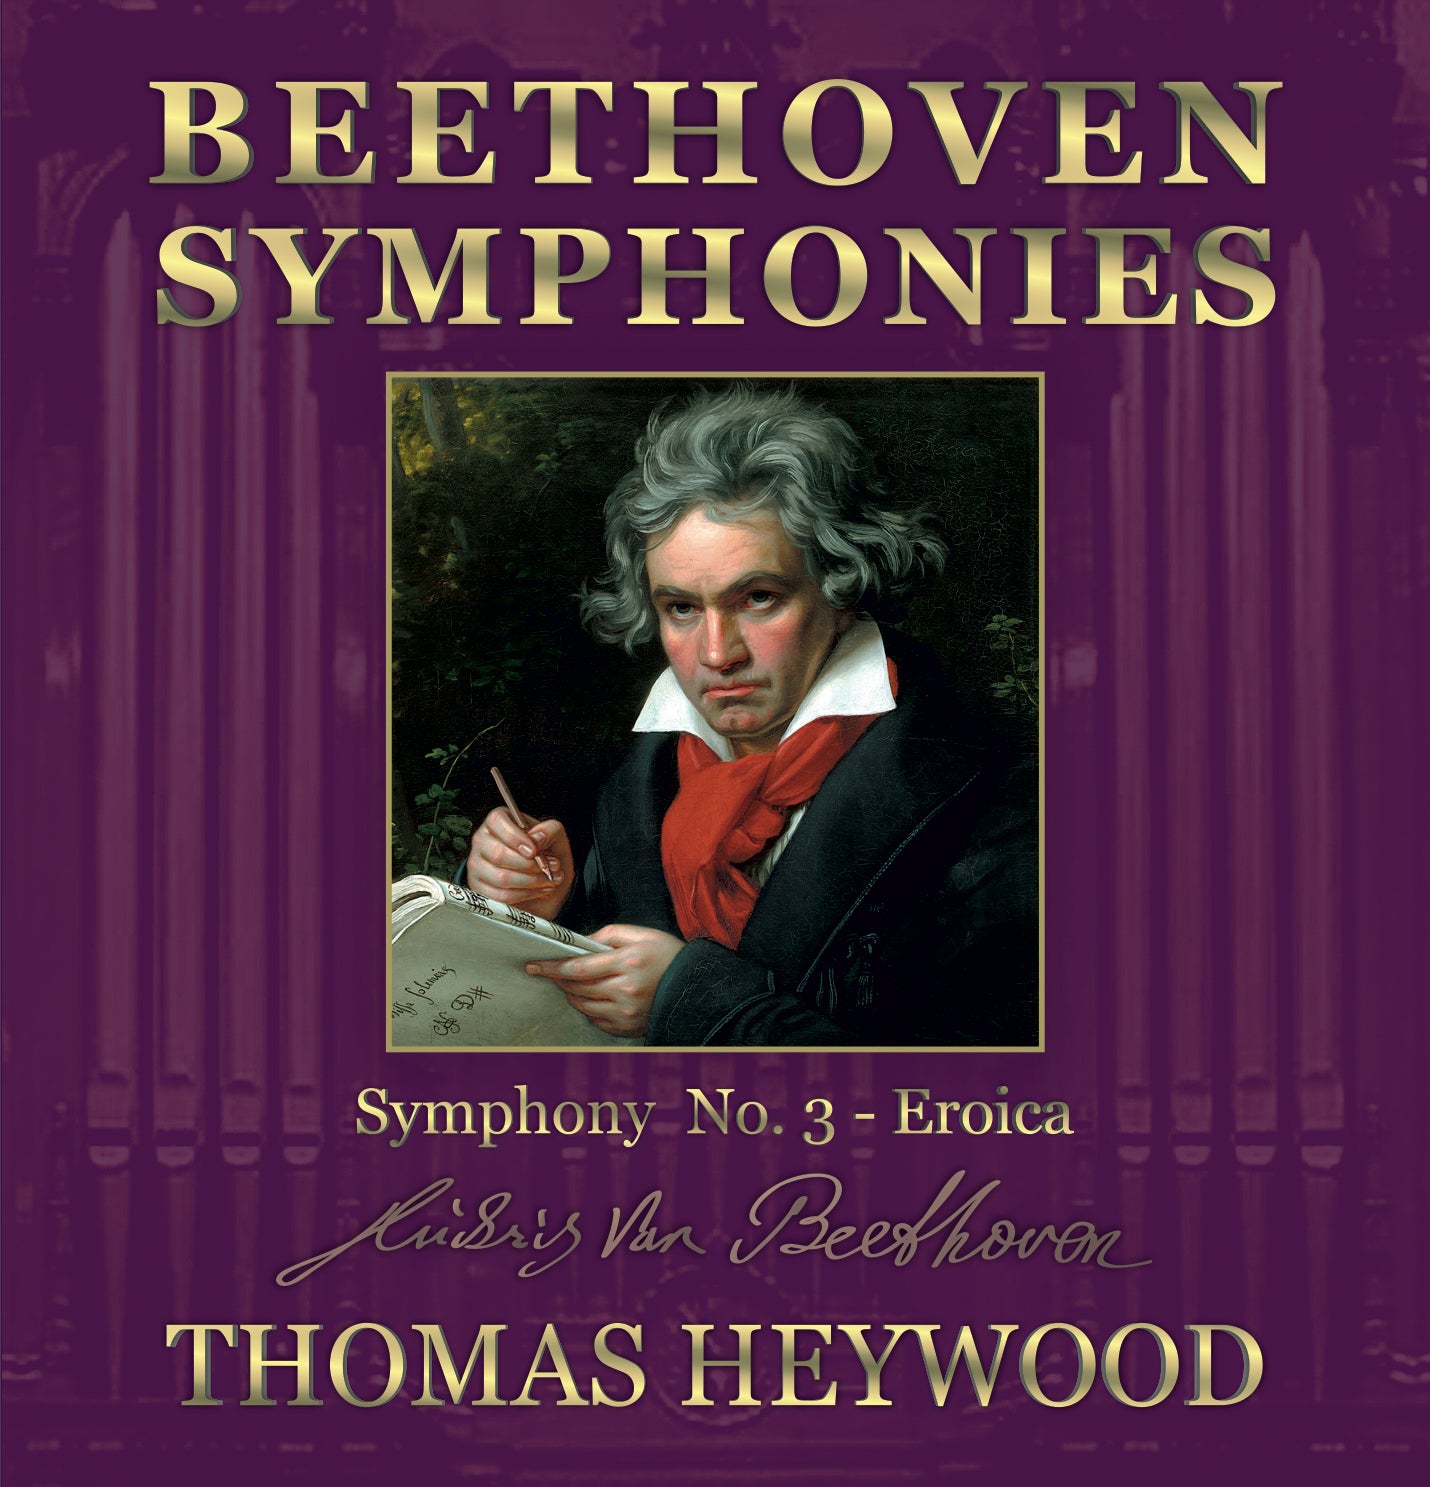 Beethoven/Heywood - Symphony No. 3 - 'Eroica' - Concert Organ